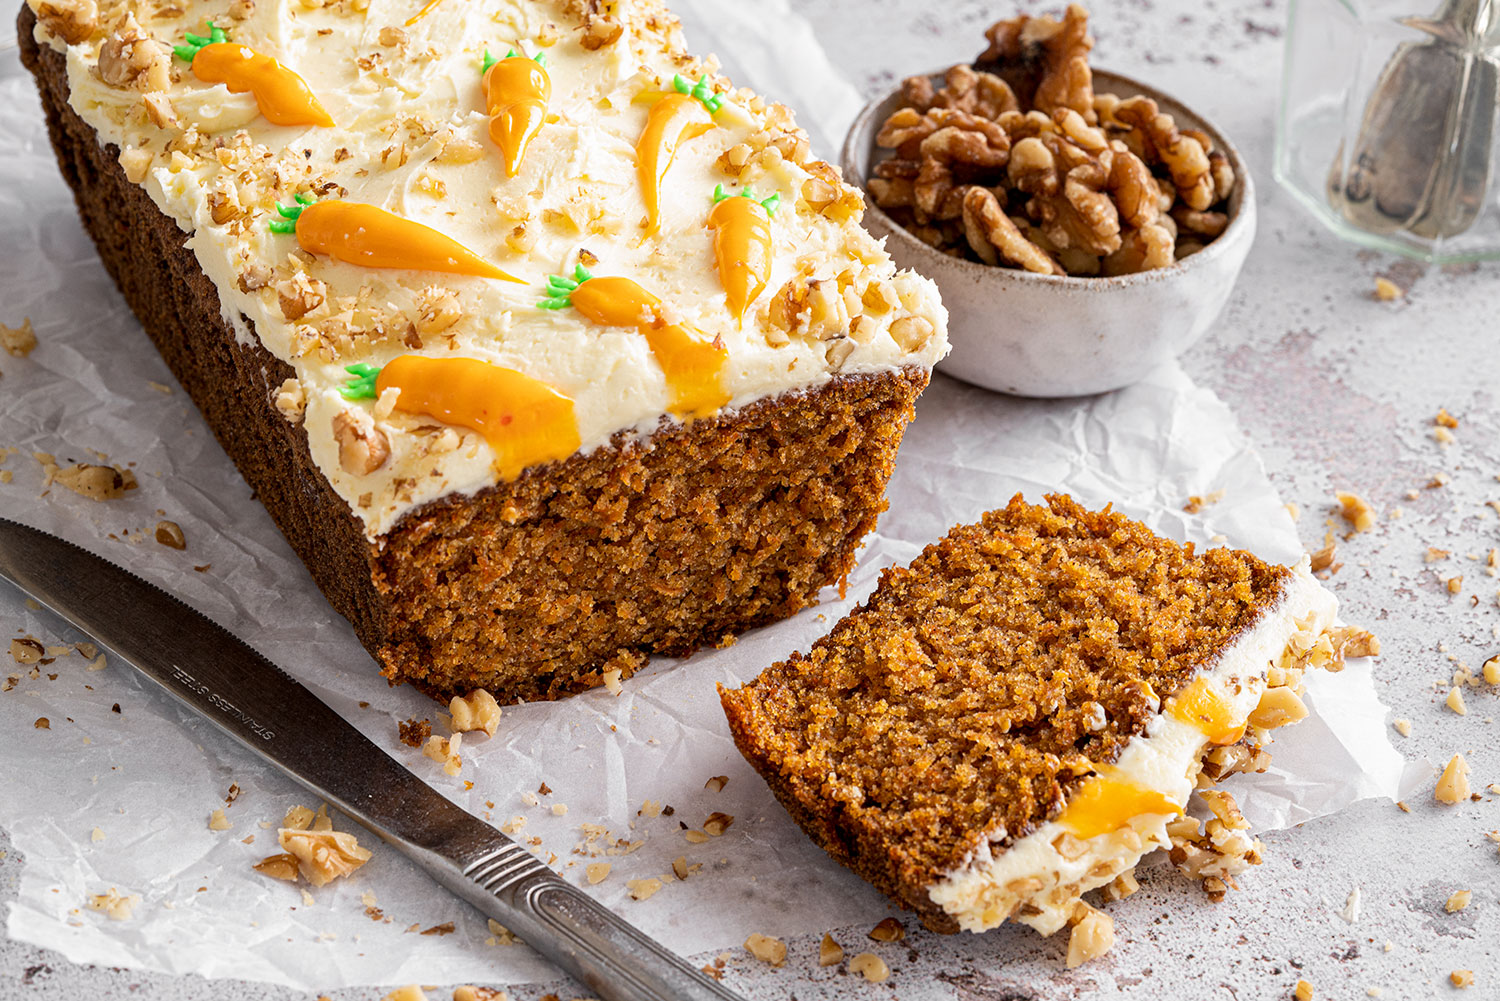 Gluten-free carrot cake recipe - BEST EVER! (dairy-free option)